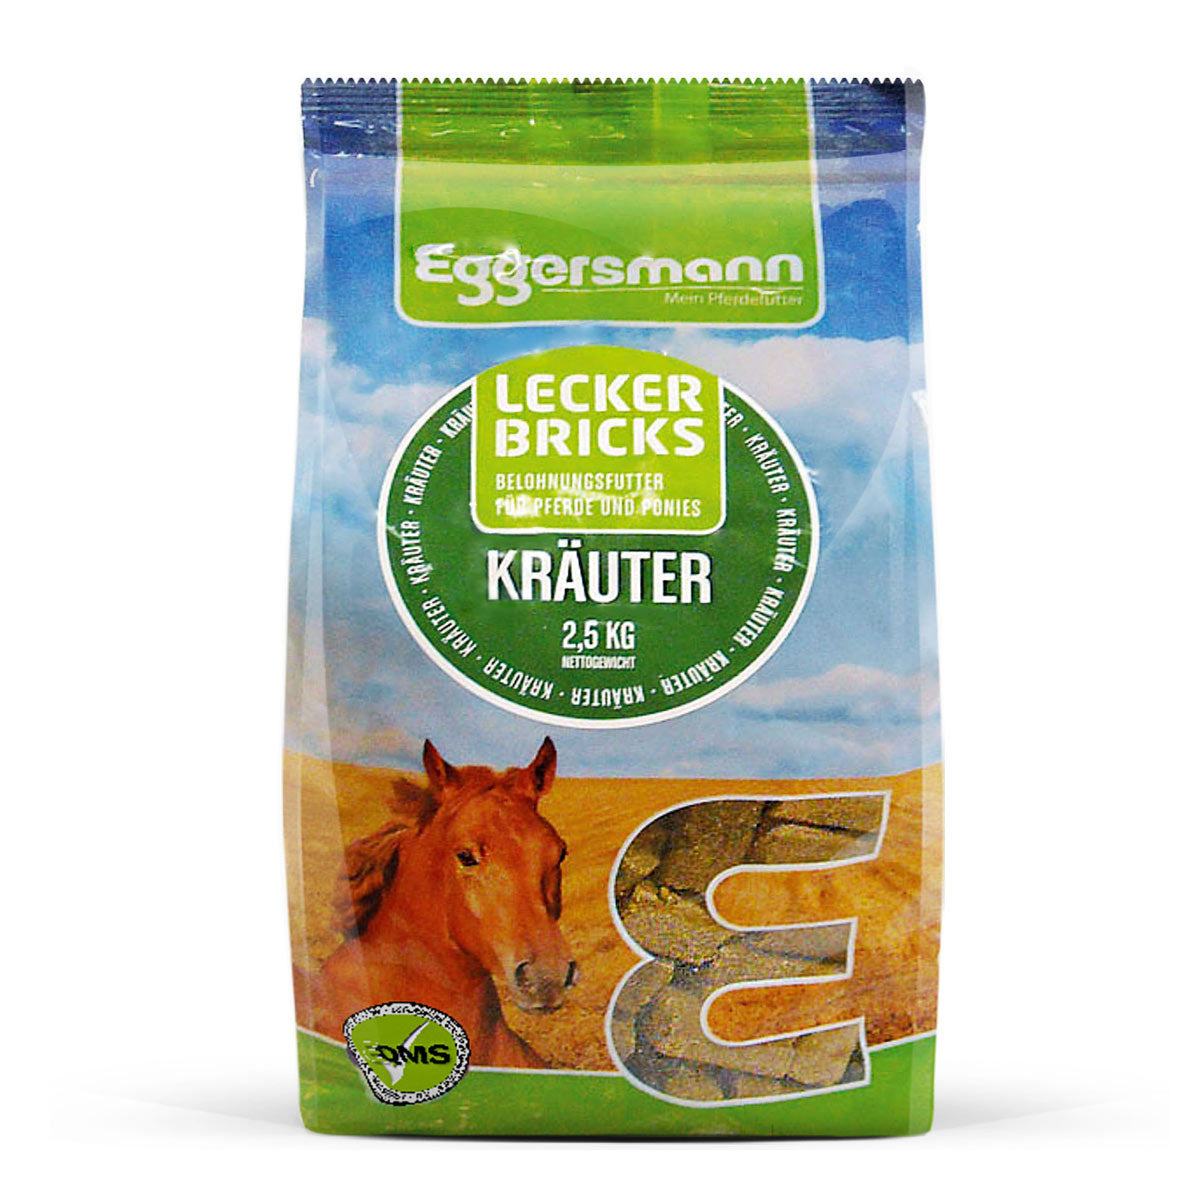 Eggersmann Lecker Bricks Kräuter